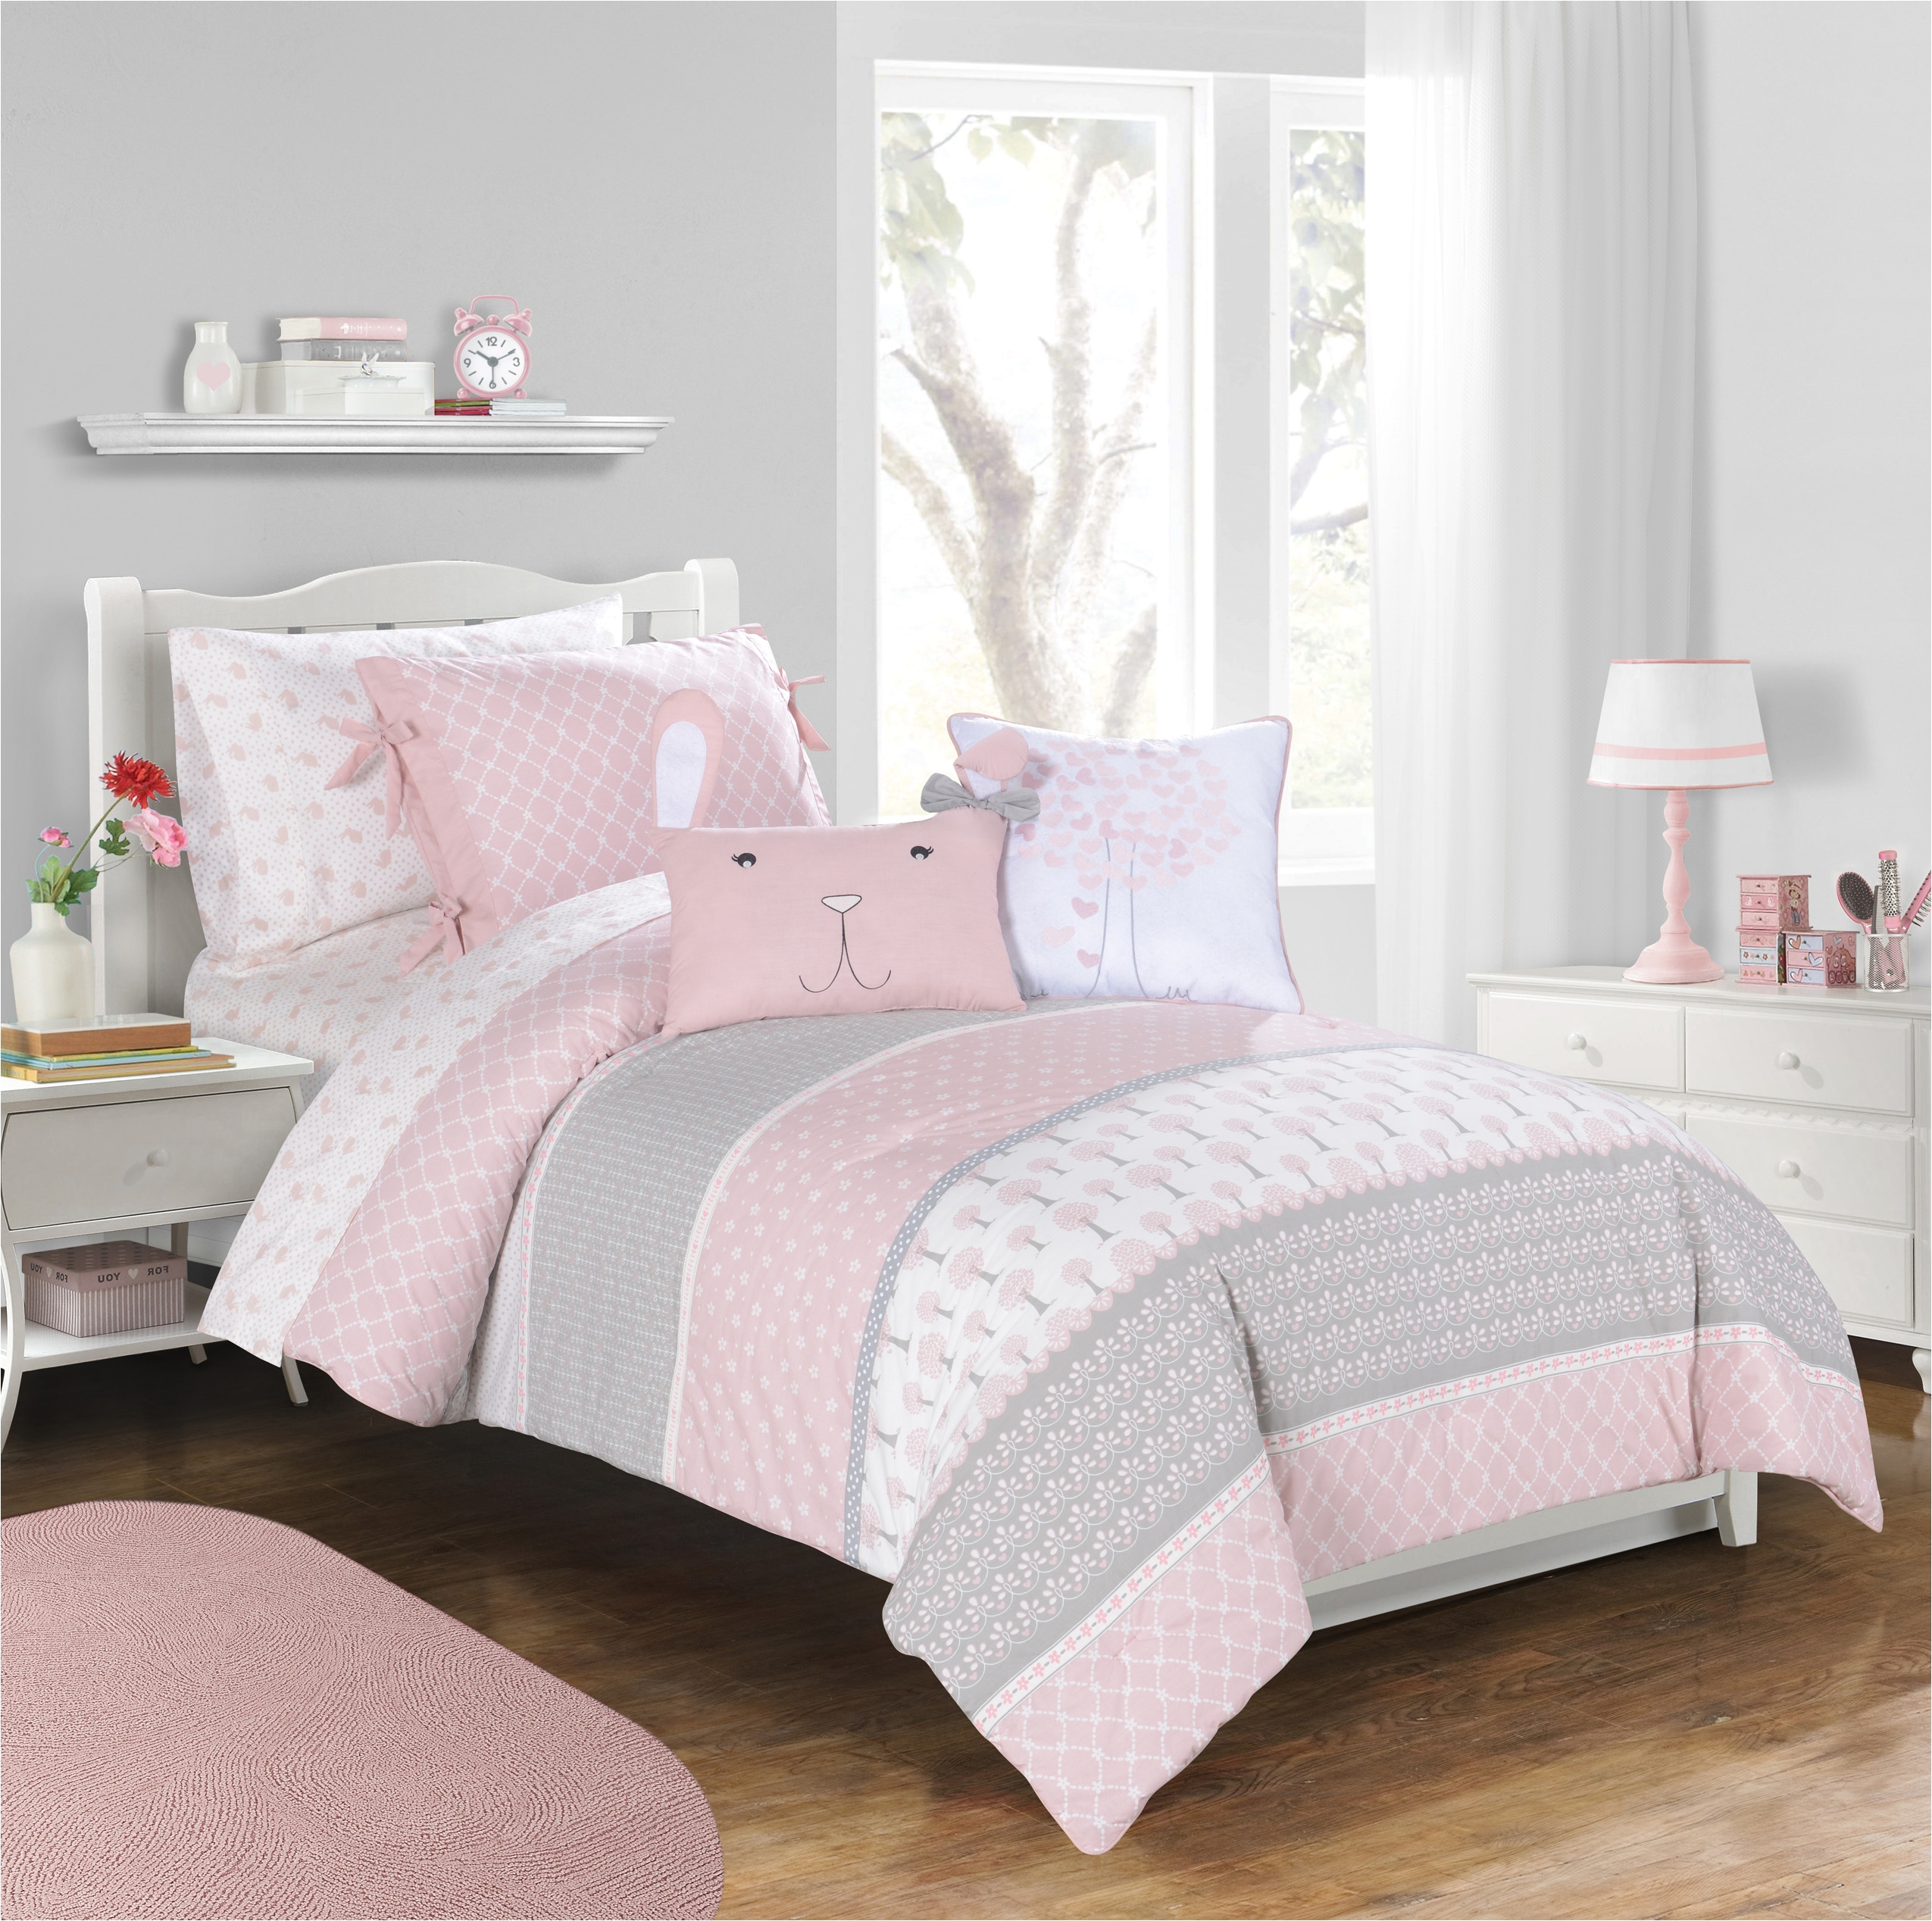 Teenage Chairs for Bedrooms Uk Bedroom Pink Bedroom Furniture for Ebay Argos Hot Sets Childrens